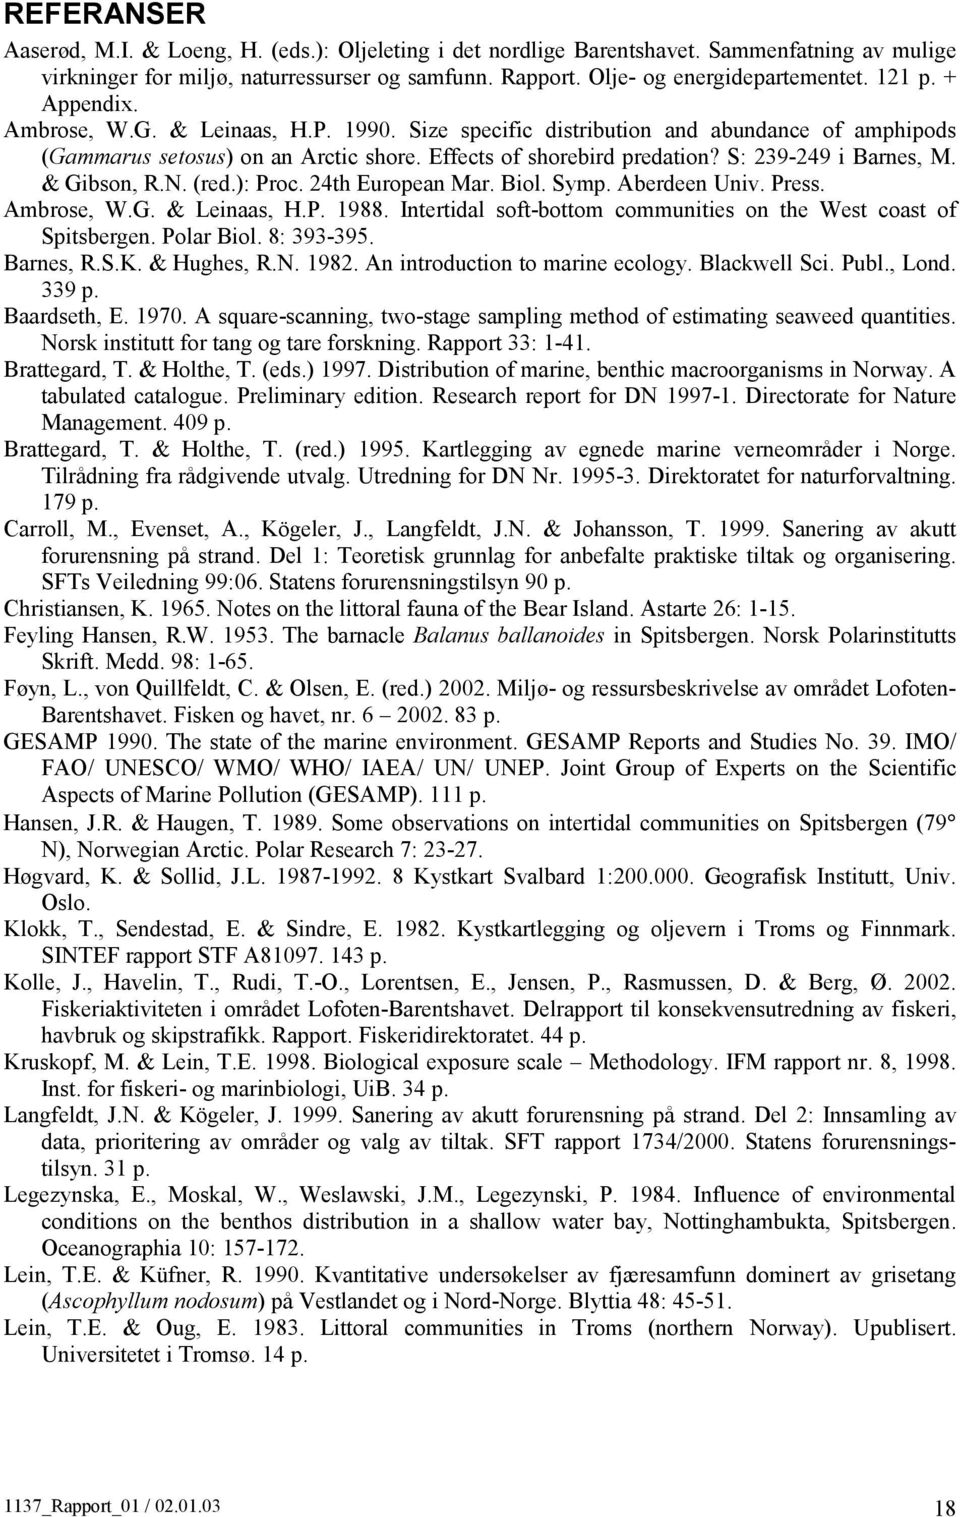 S: 239-249 i Barnes, M. & Gibson, R.N. (red.): Proc. 24th European Mar. Biol. Symp. Aberdeen Univ. Press. Ambrose, W.G. & Leinaas, H.P. 1988.